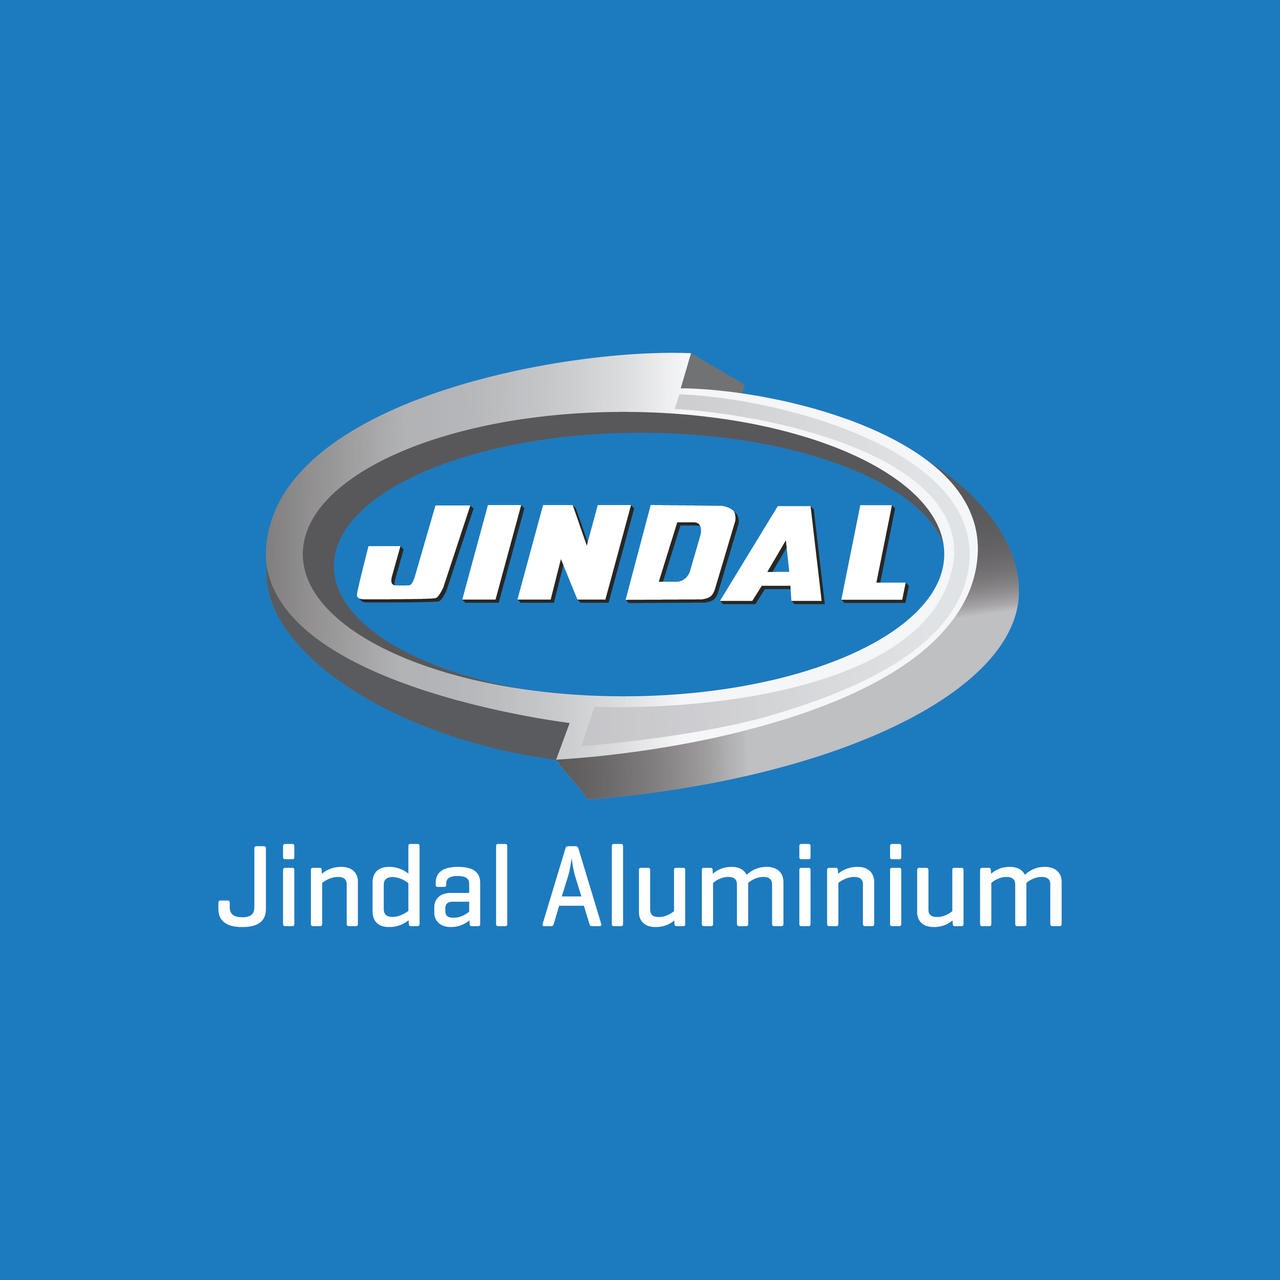 Jindal Aluminium Ltd jobs for General Manager (Operations) at Bengaluru